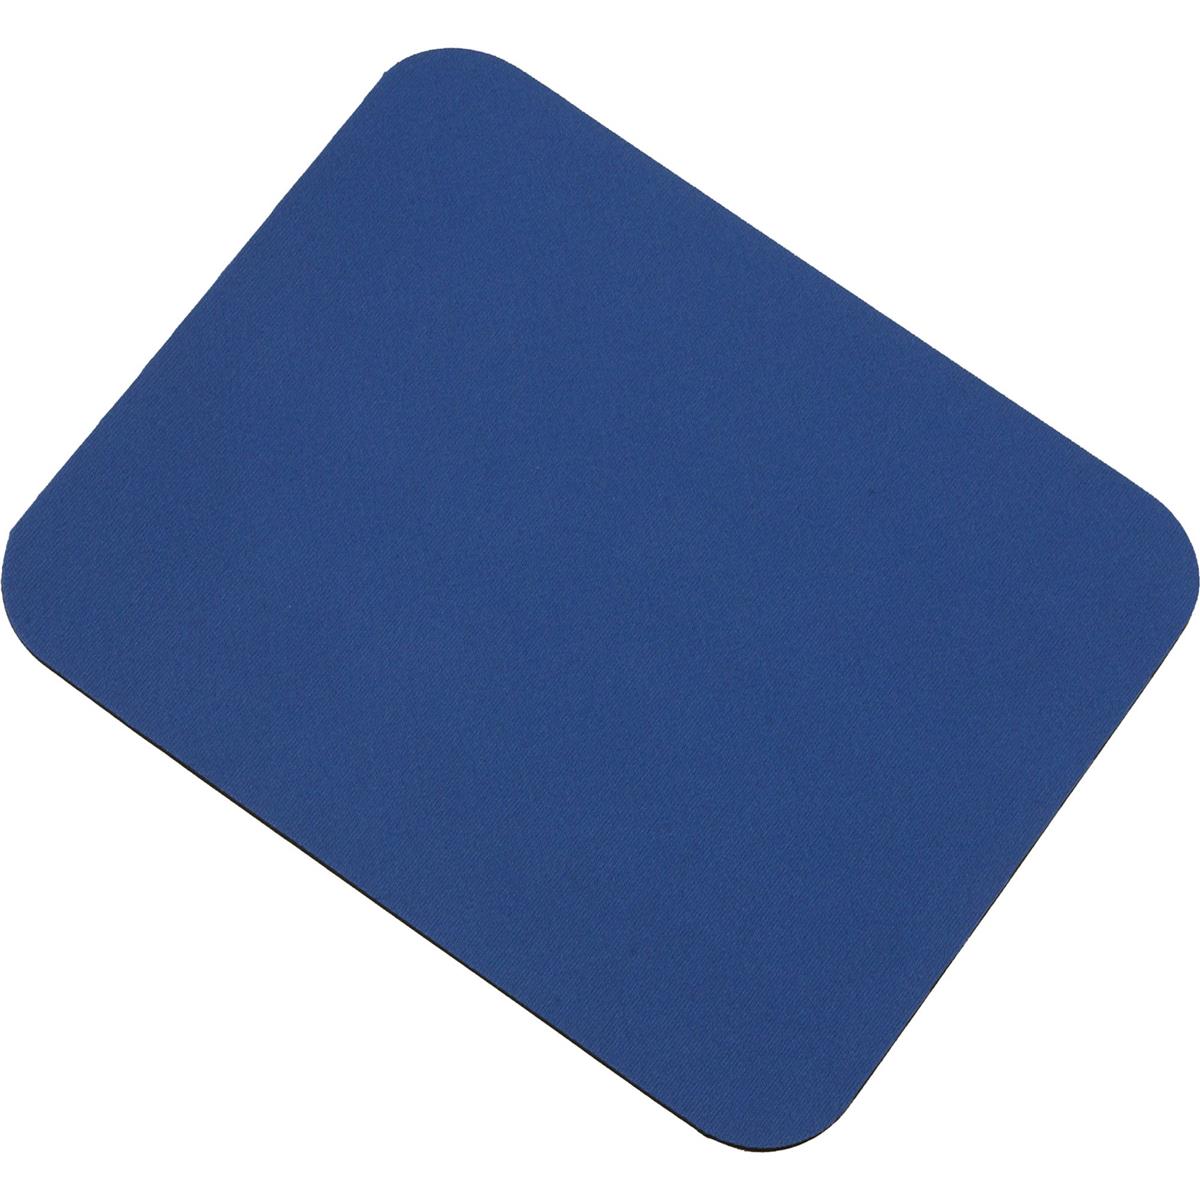 Image of Belkin Standard Mouse Pad